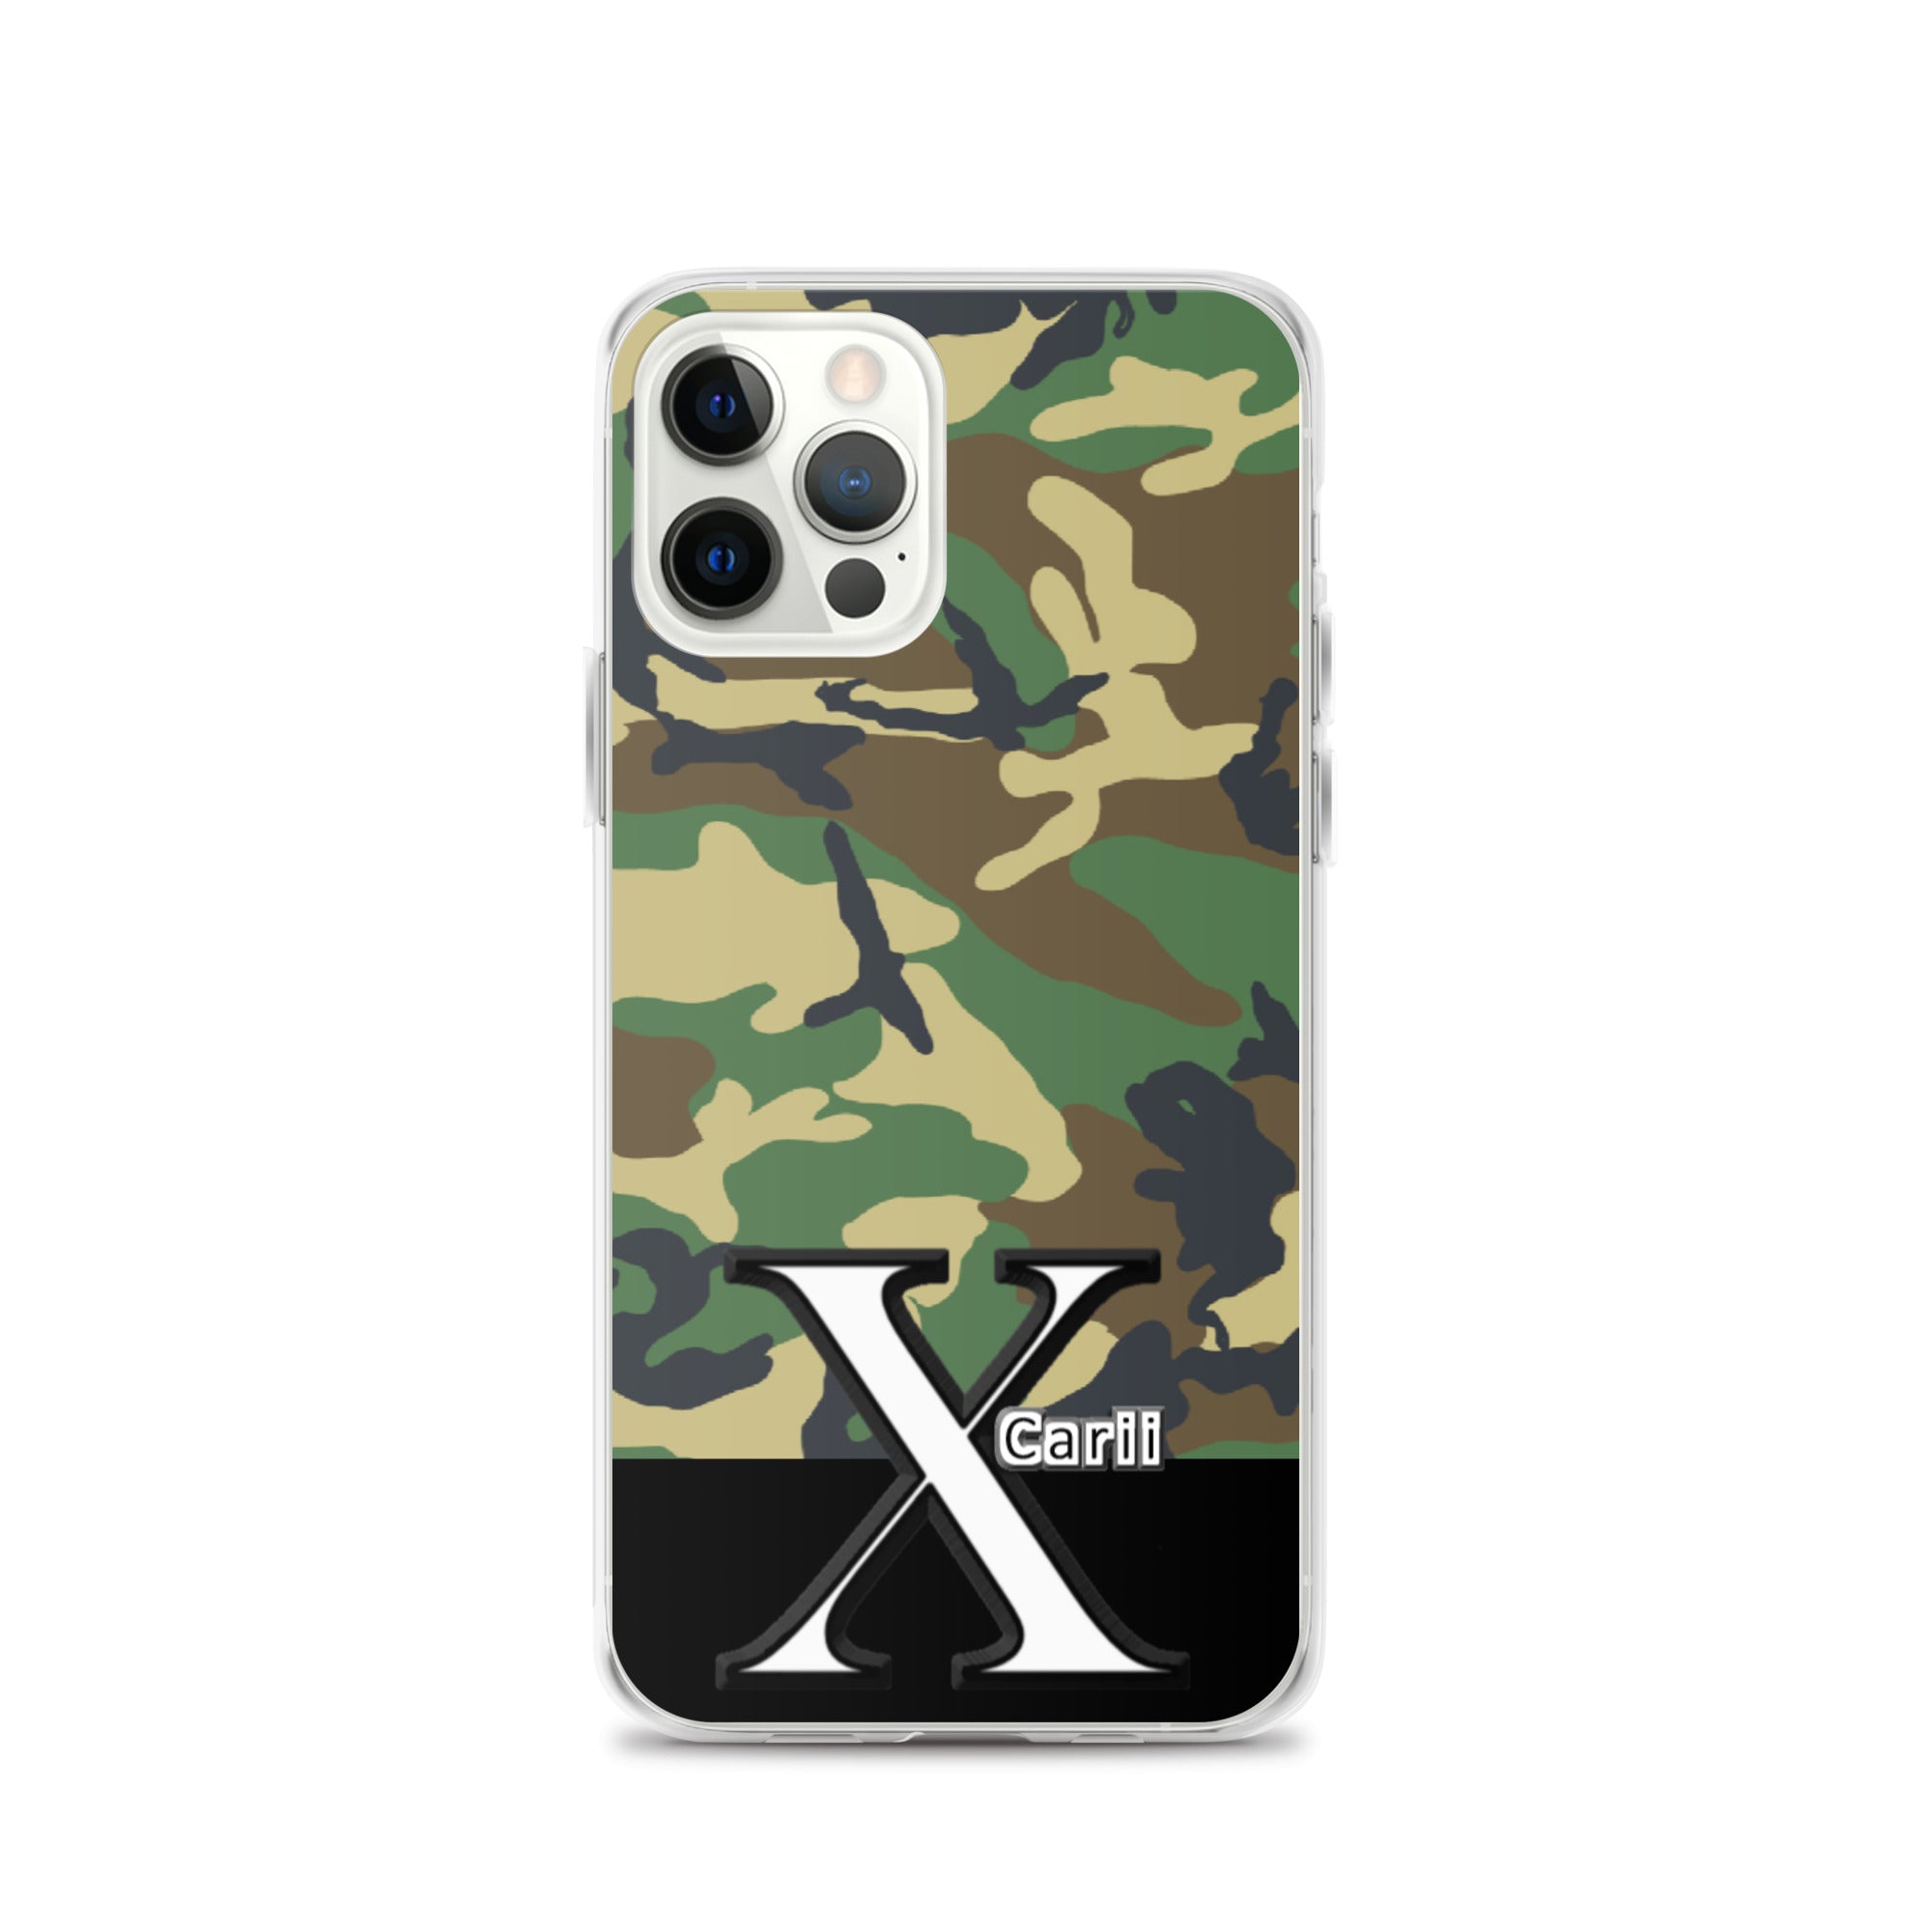 Xcarii Xii - CAMO iPhone Case